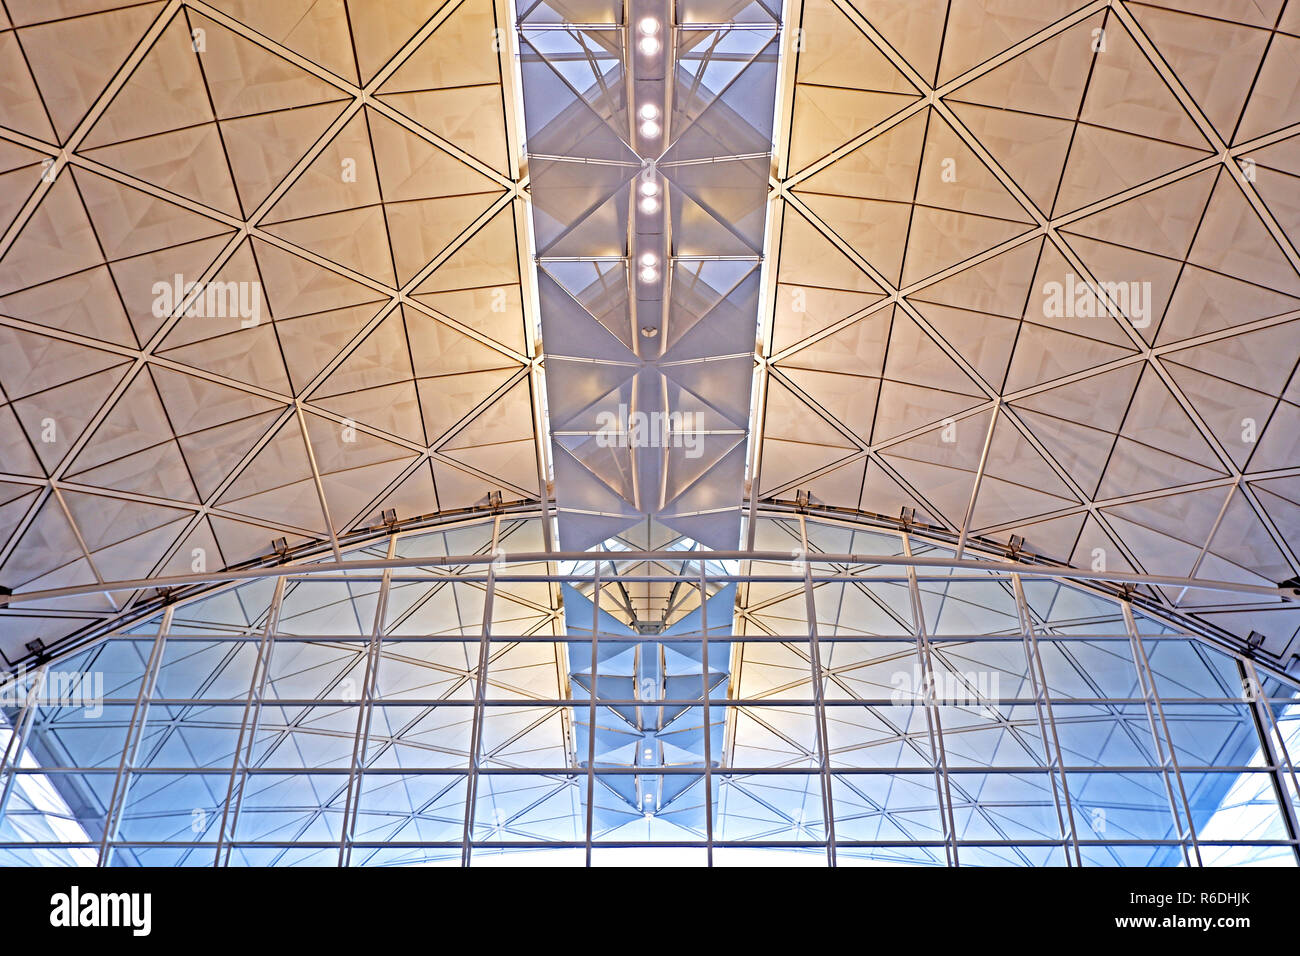 The interior architecture design of Hong Kong international airport main terminal building Stock Photo